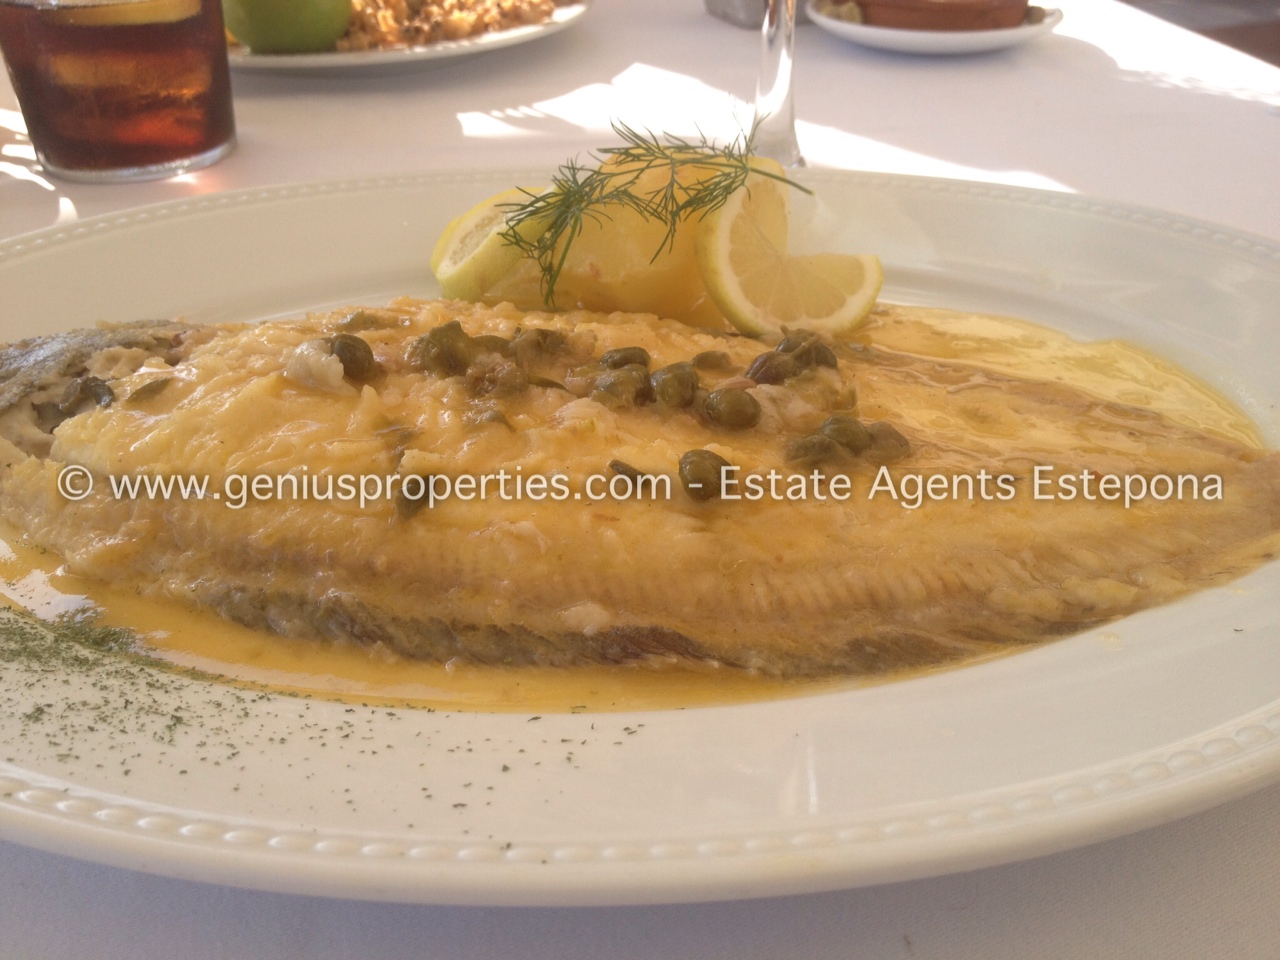 Estepona Beach Restaurant Genius Properties